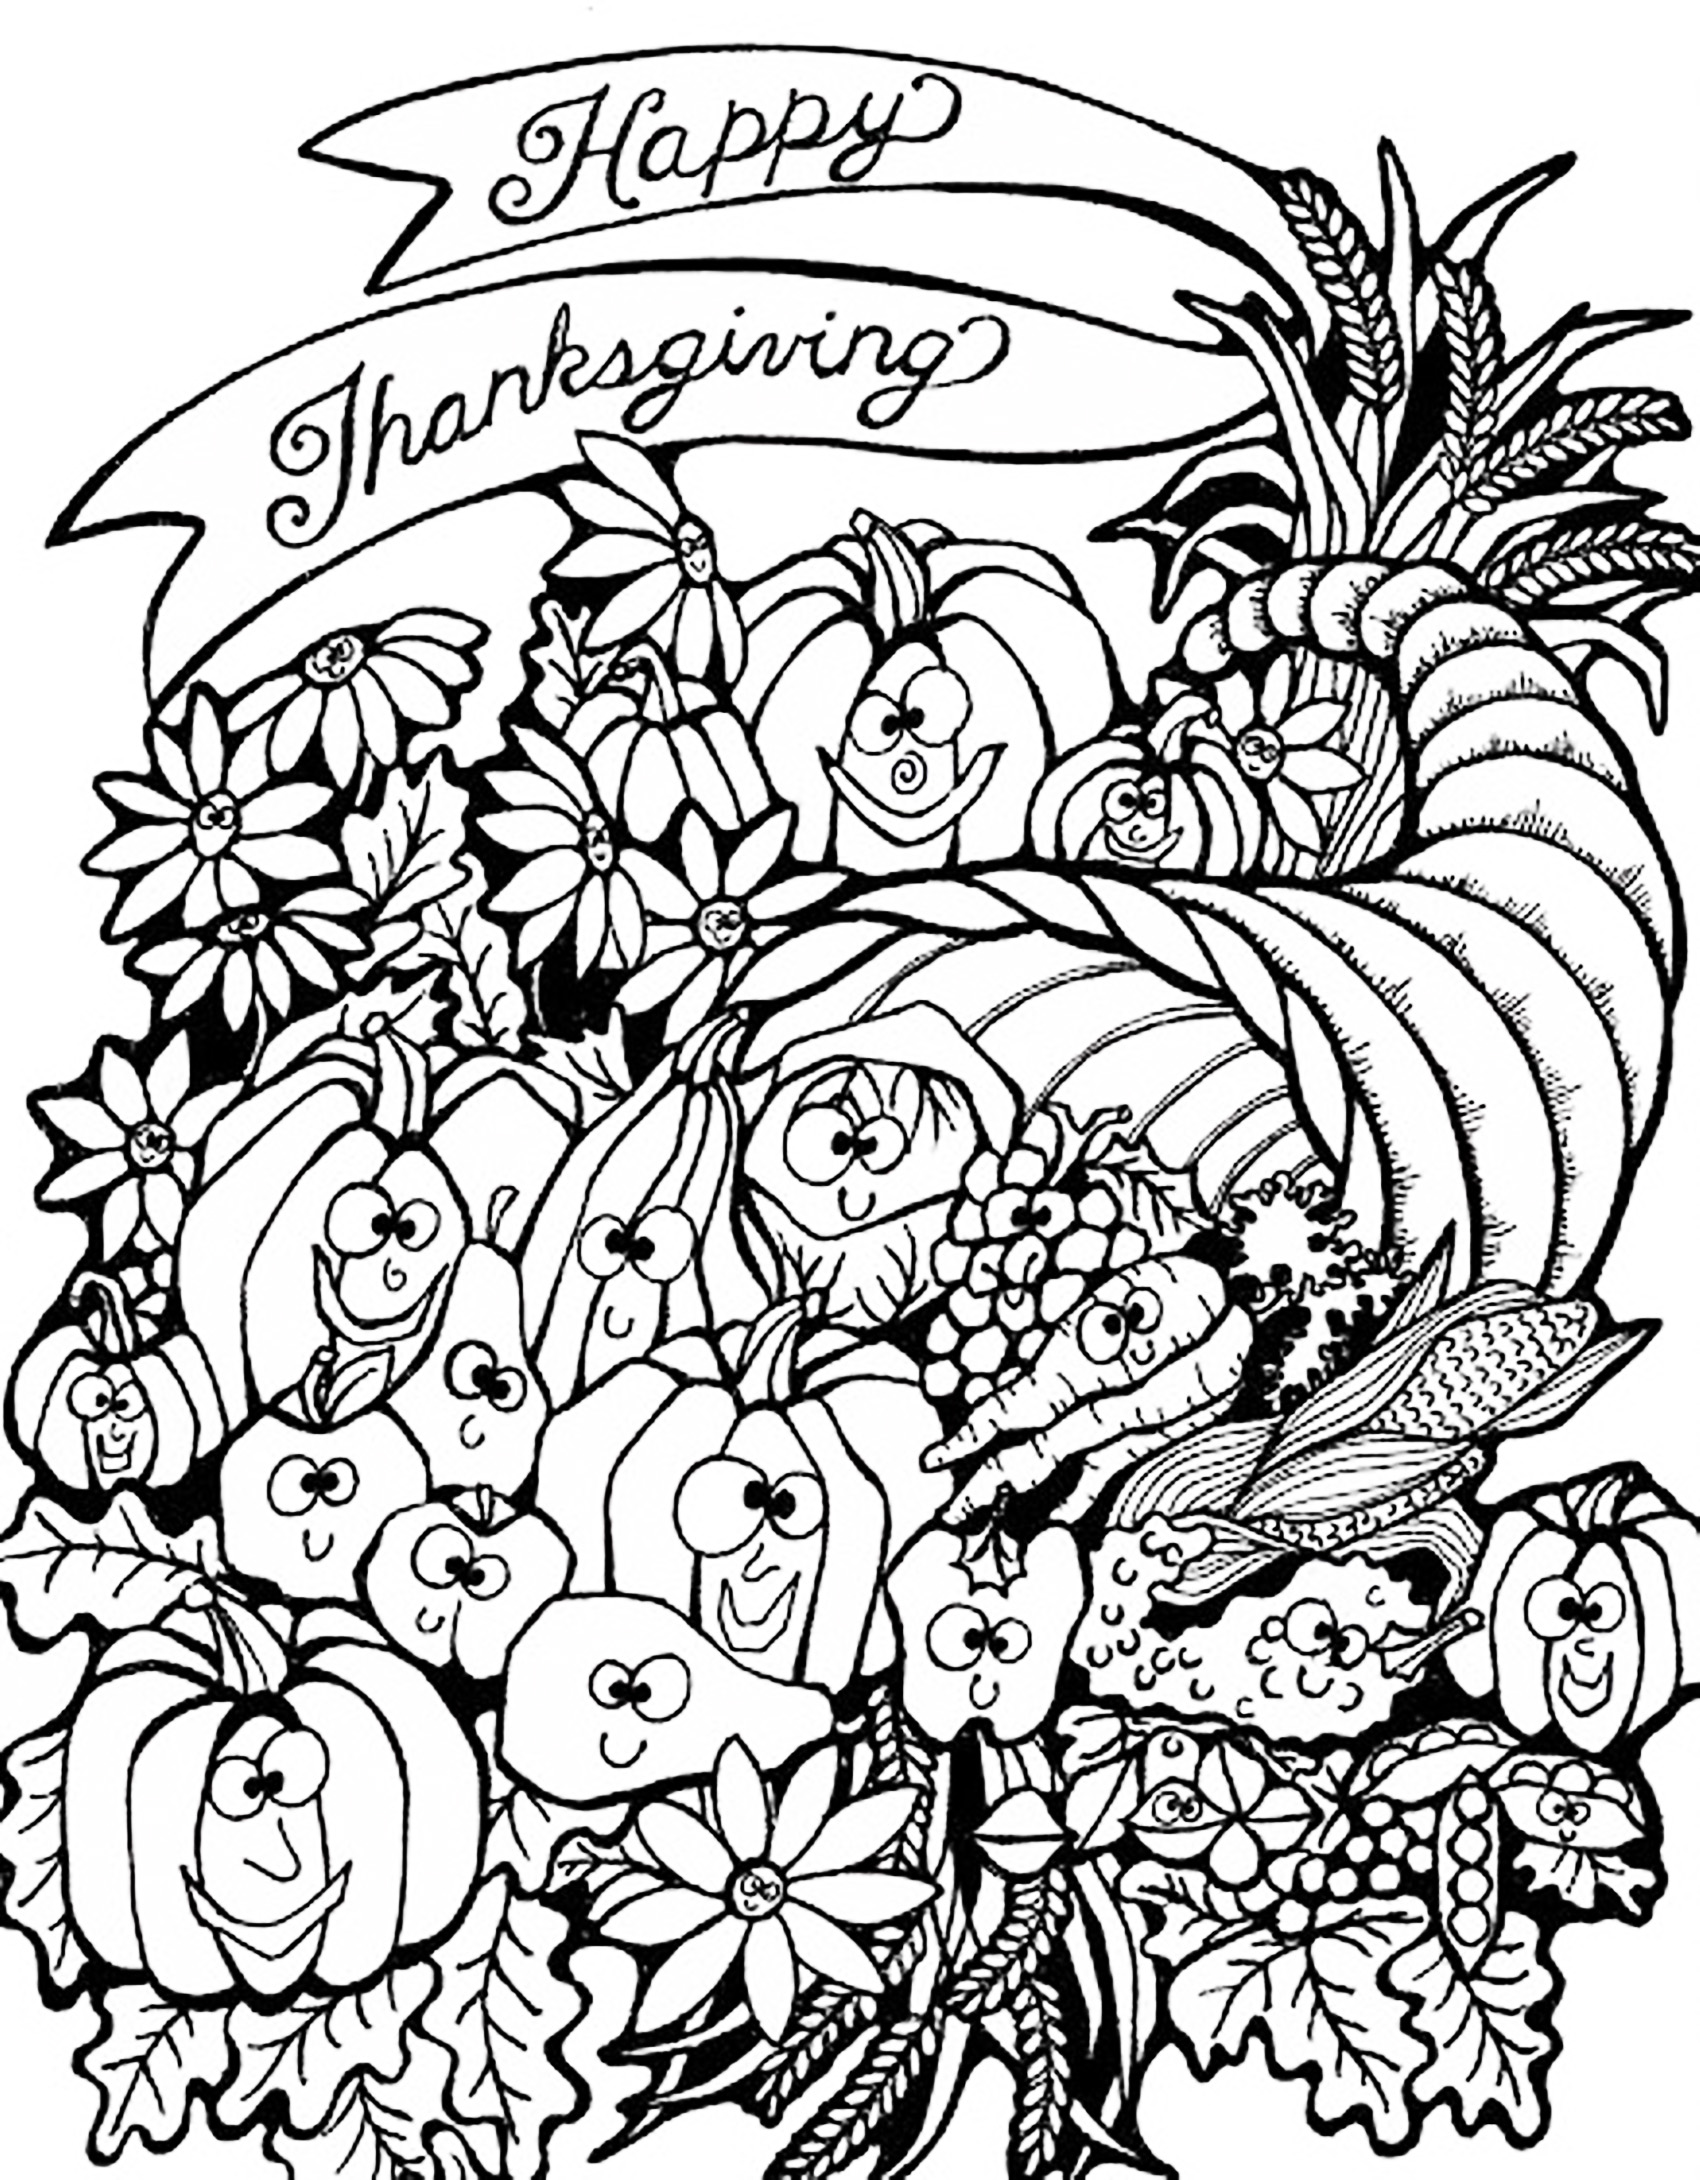 It's Thanksgiving day ! Color this harvest cornucopia